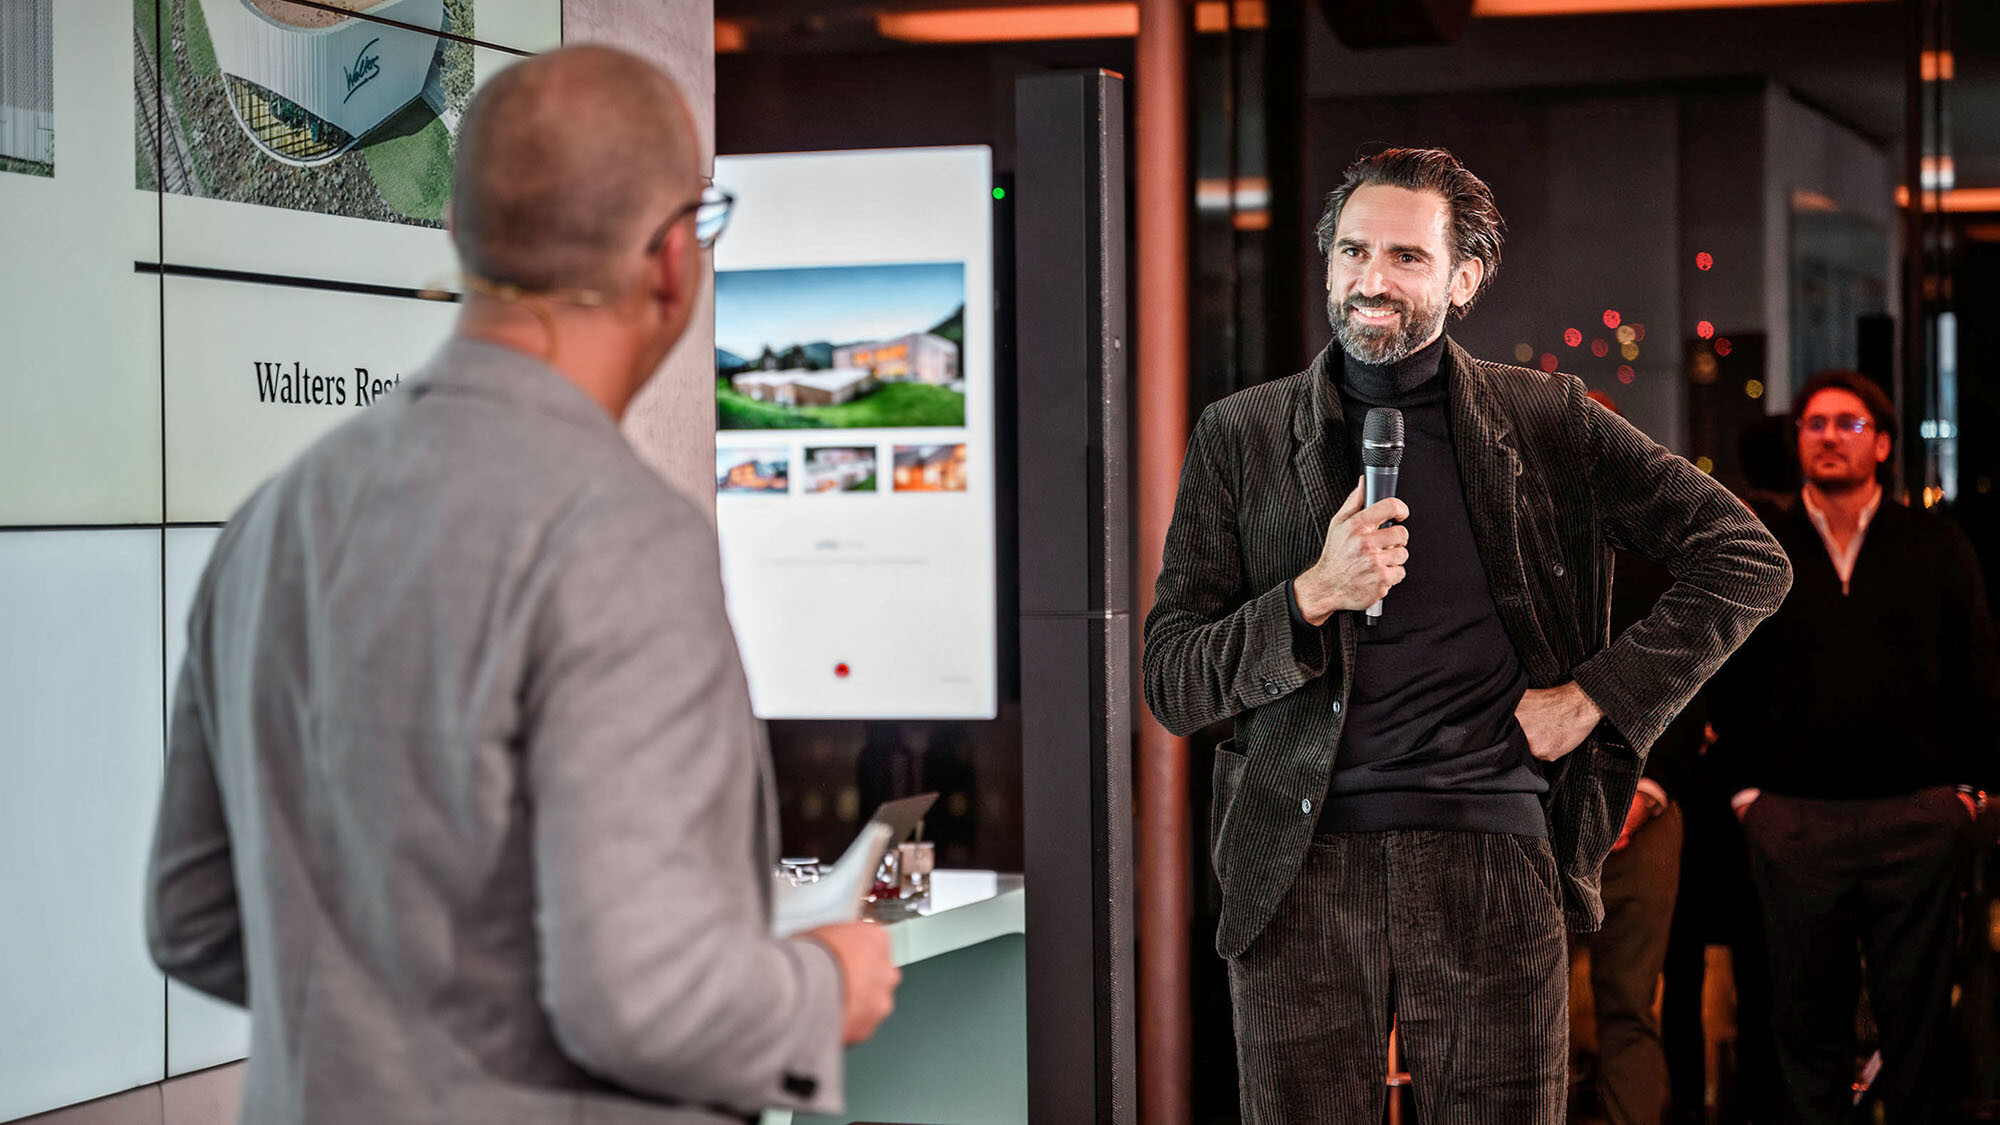 International Marketing Manager Jürgen Jungmair and architect Thomas Heil from the Austrian office dreiplus Architekten talking in front of the presentation surface.